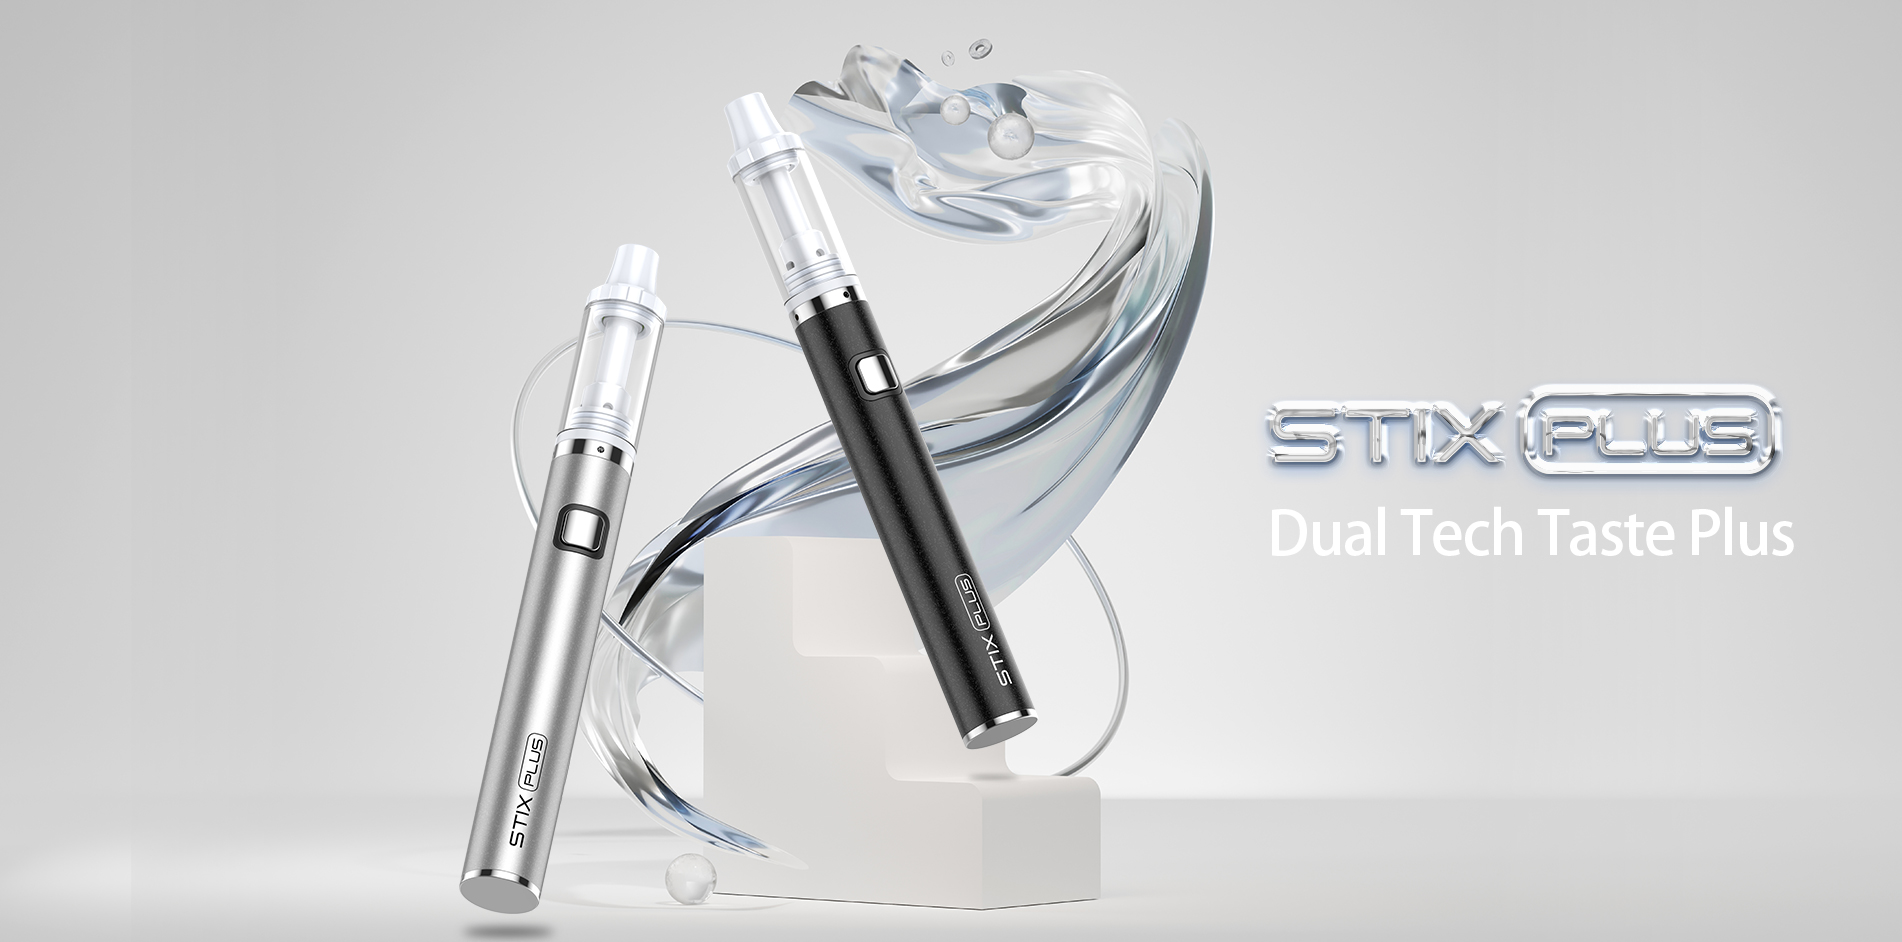 Yocan Stix Plus vape pen is a high-quality and refillable vaporizer.